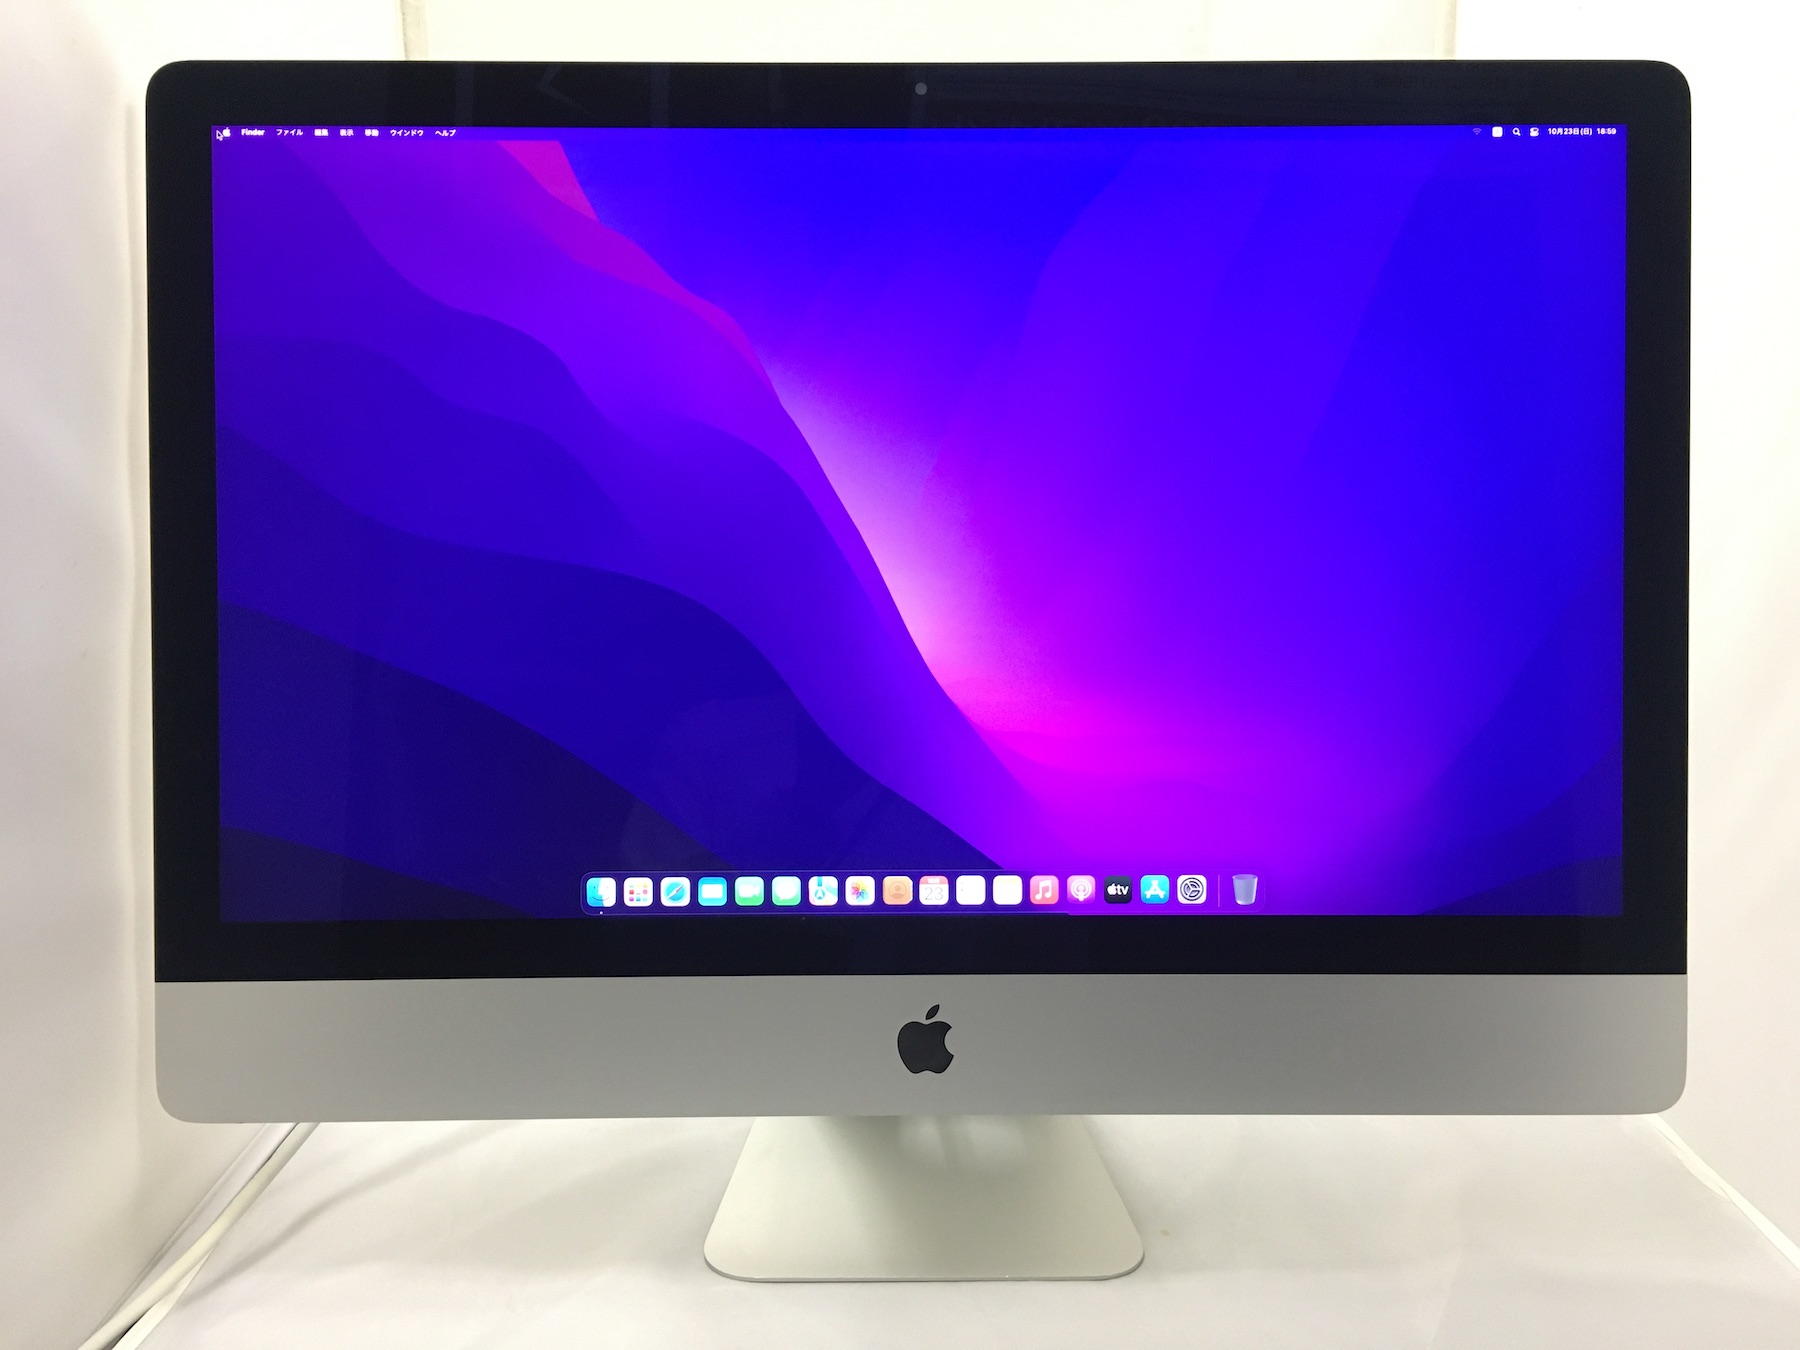 iMac 27-inch Late2015 (Core i7/16GB/2TB)